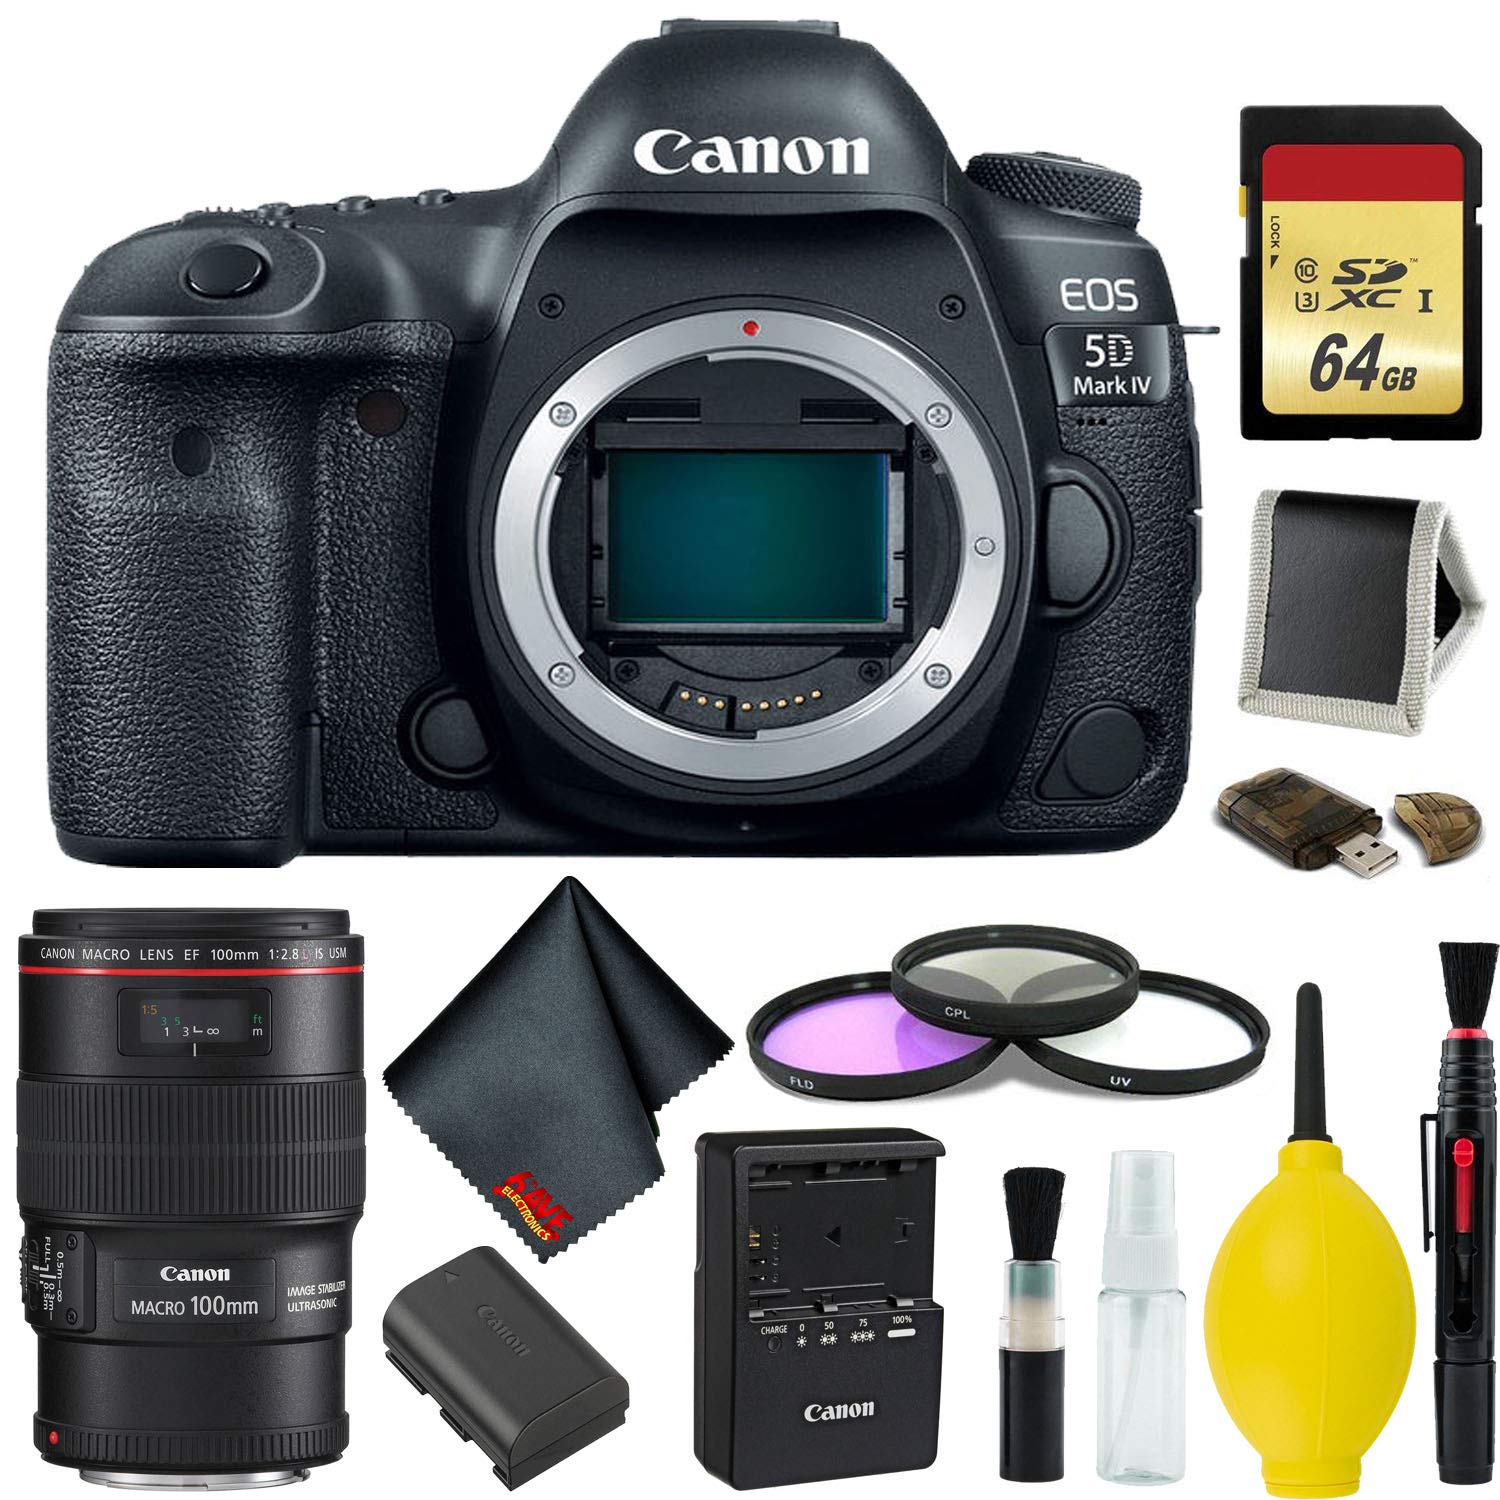 Canon EOS 5D Mark IV DSLR Camera Body Only Complete Kit (International Model) w/Canon EF 100mm f/2.8L Macro is USM Lens